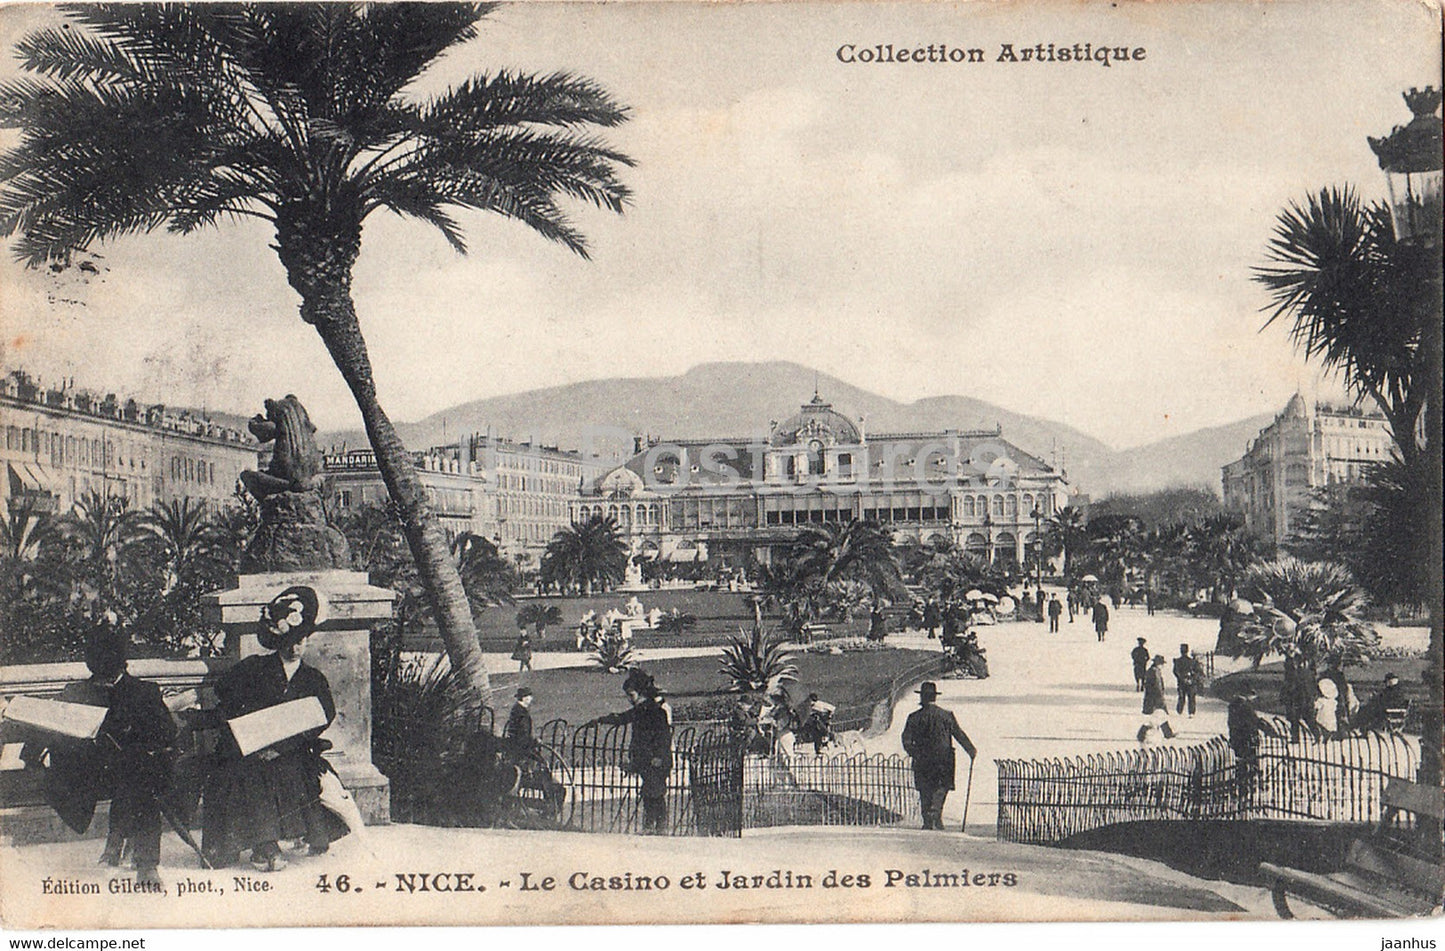 Nice - Le Casino et Jardin des Palmiers - Collection Artistique - 46 - old postcard - 1908 - France - used - JH Postcards